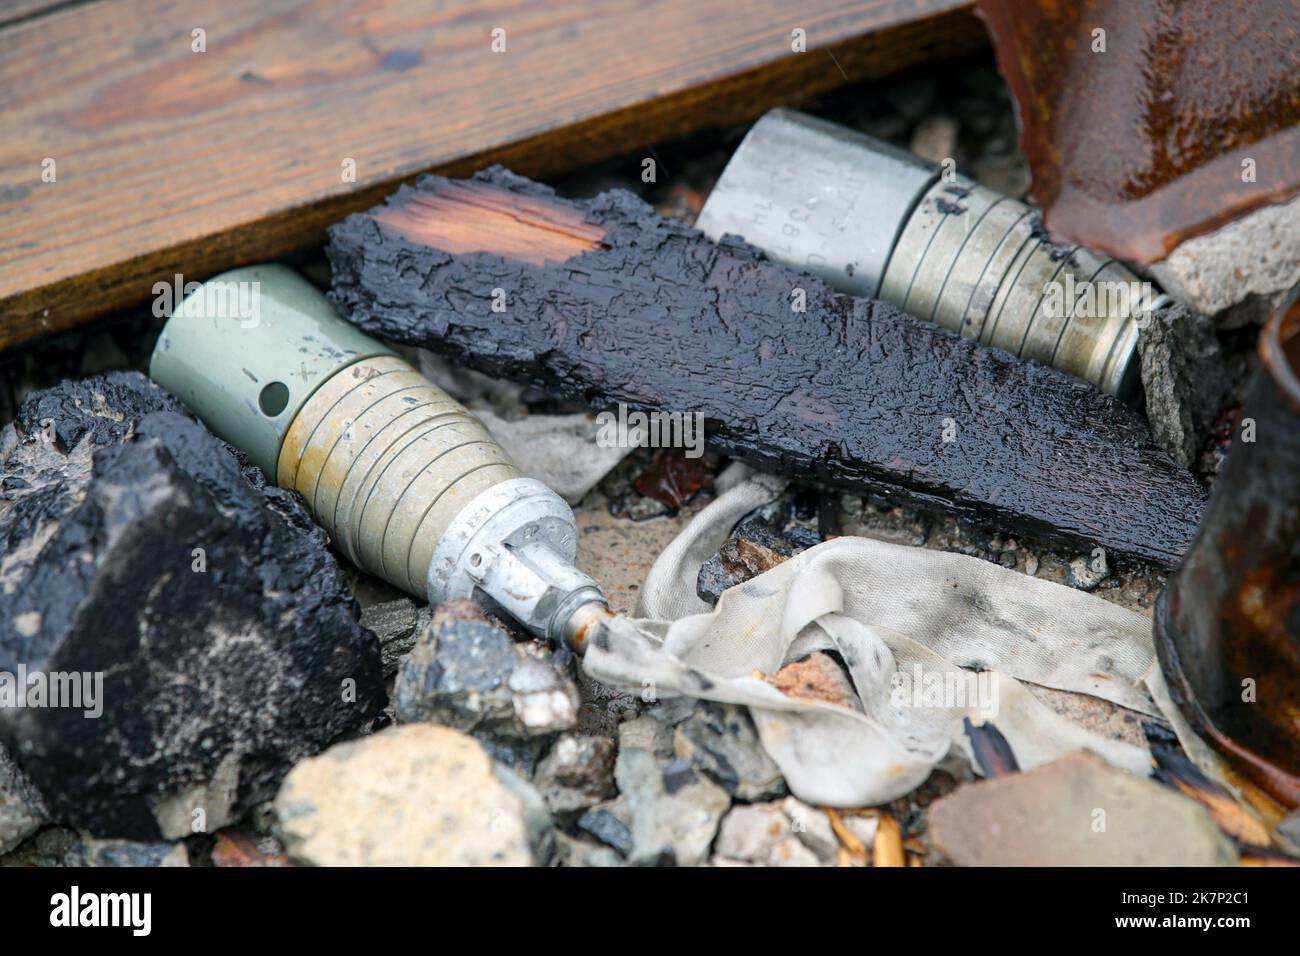 KHARKIV REGION, UKRAINE - OCTOBER 09, 2022 - A shell found on the premises of an ammunition depot abandoned by the russian occupiers, Kharkiv Region, northeastern Ukraine. Stock Photo